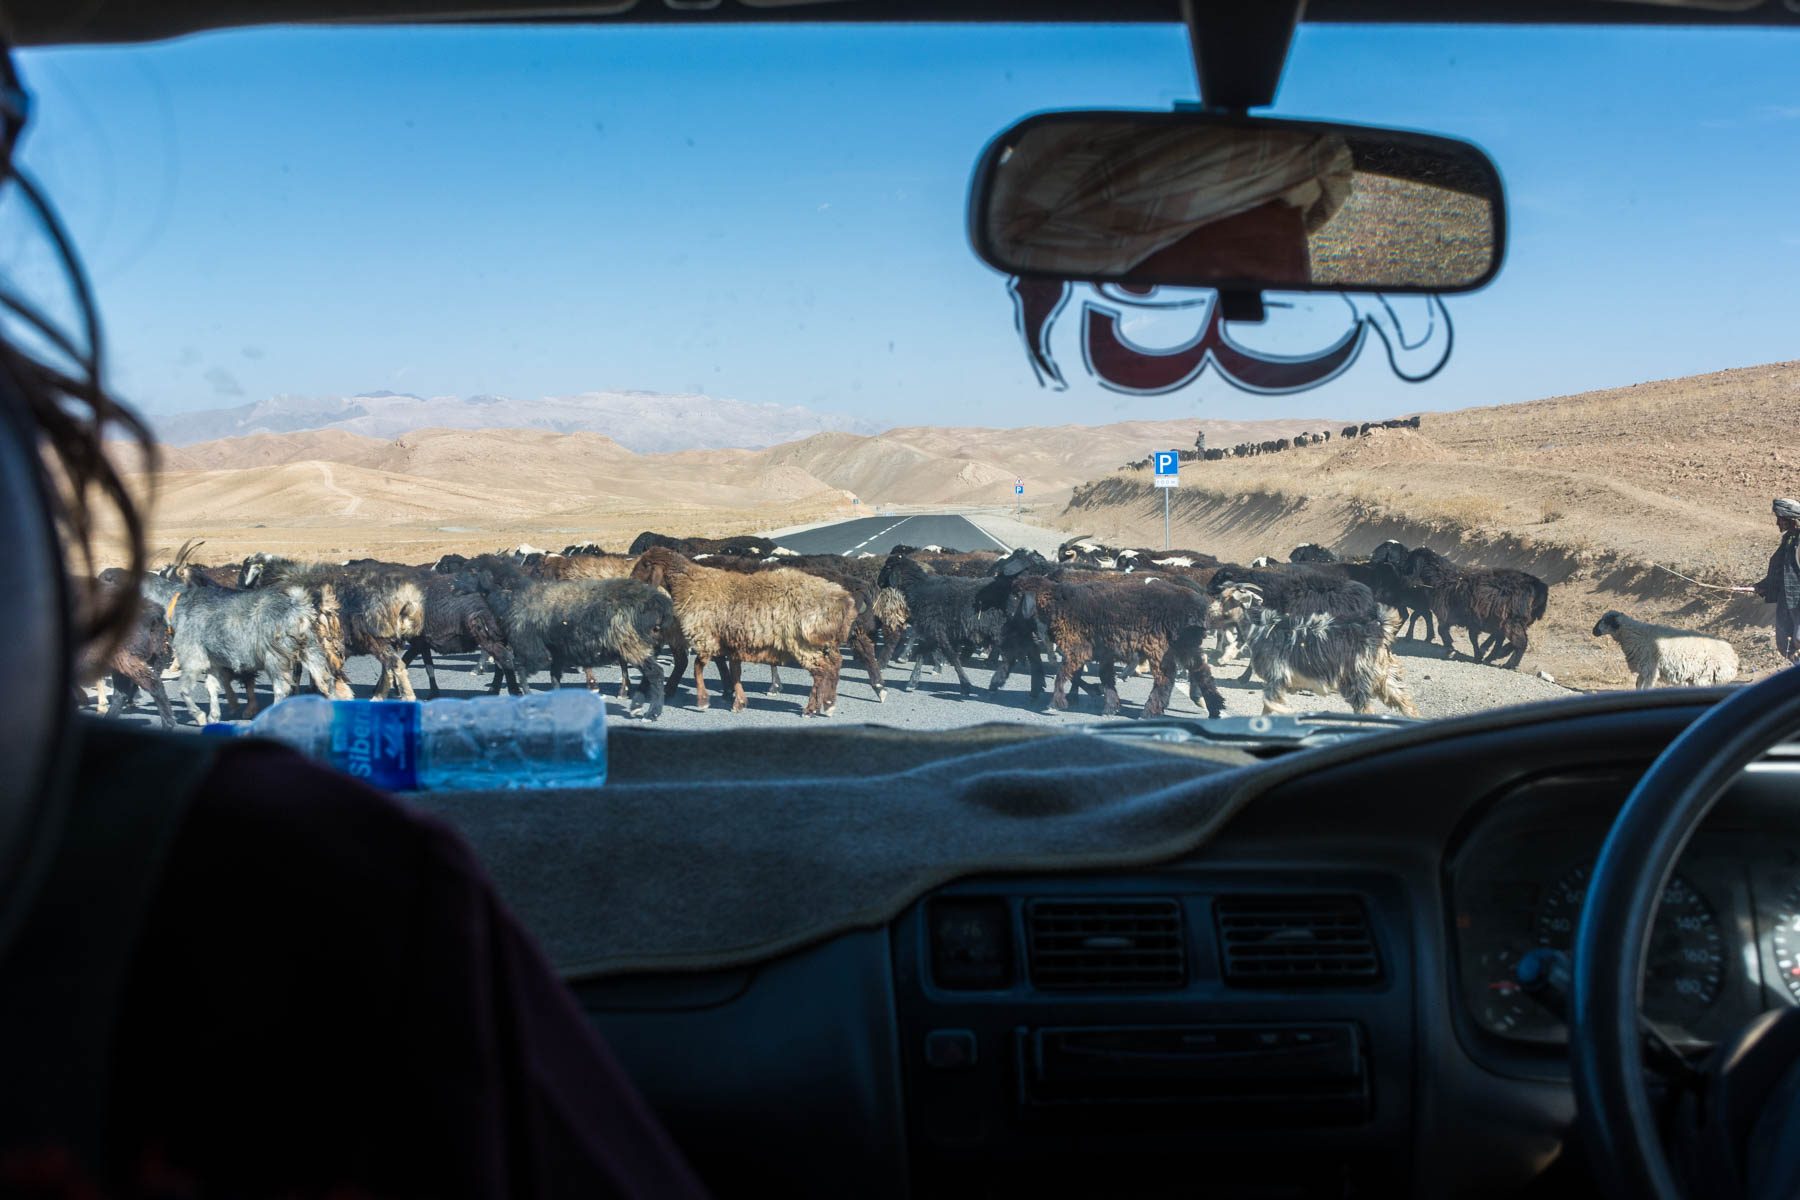 Goats blocking the road near Band-e-Amir, Afghanistan